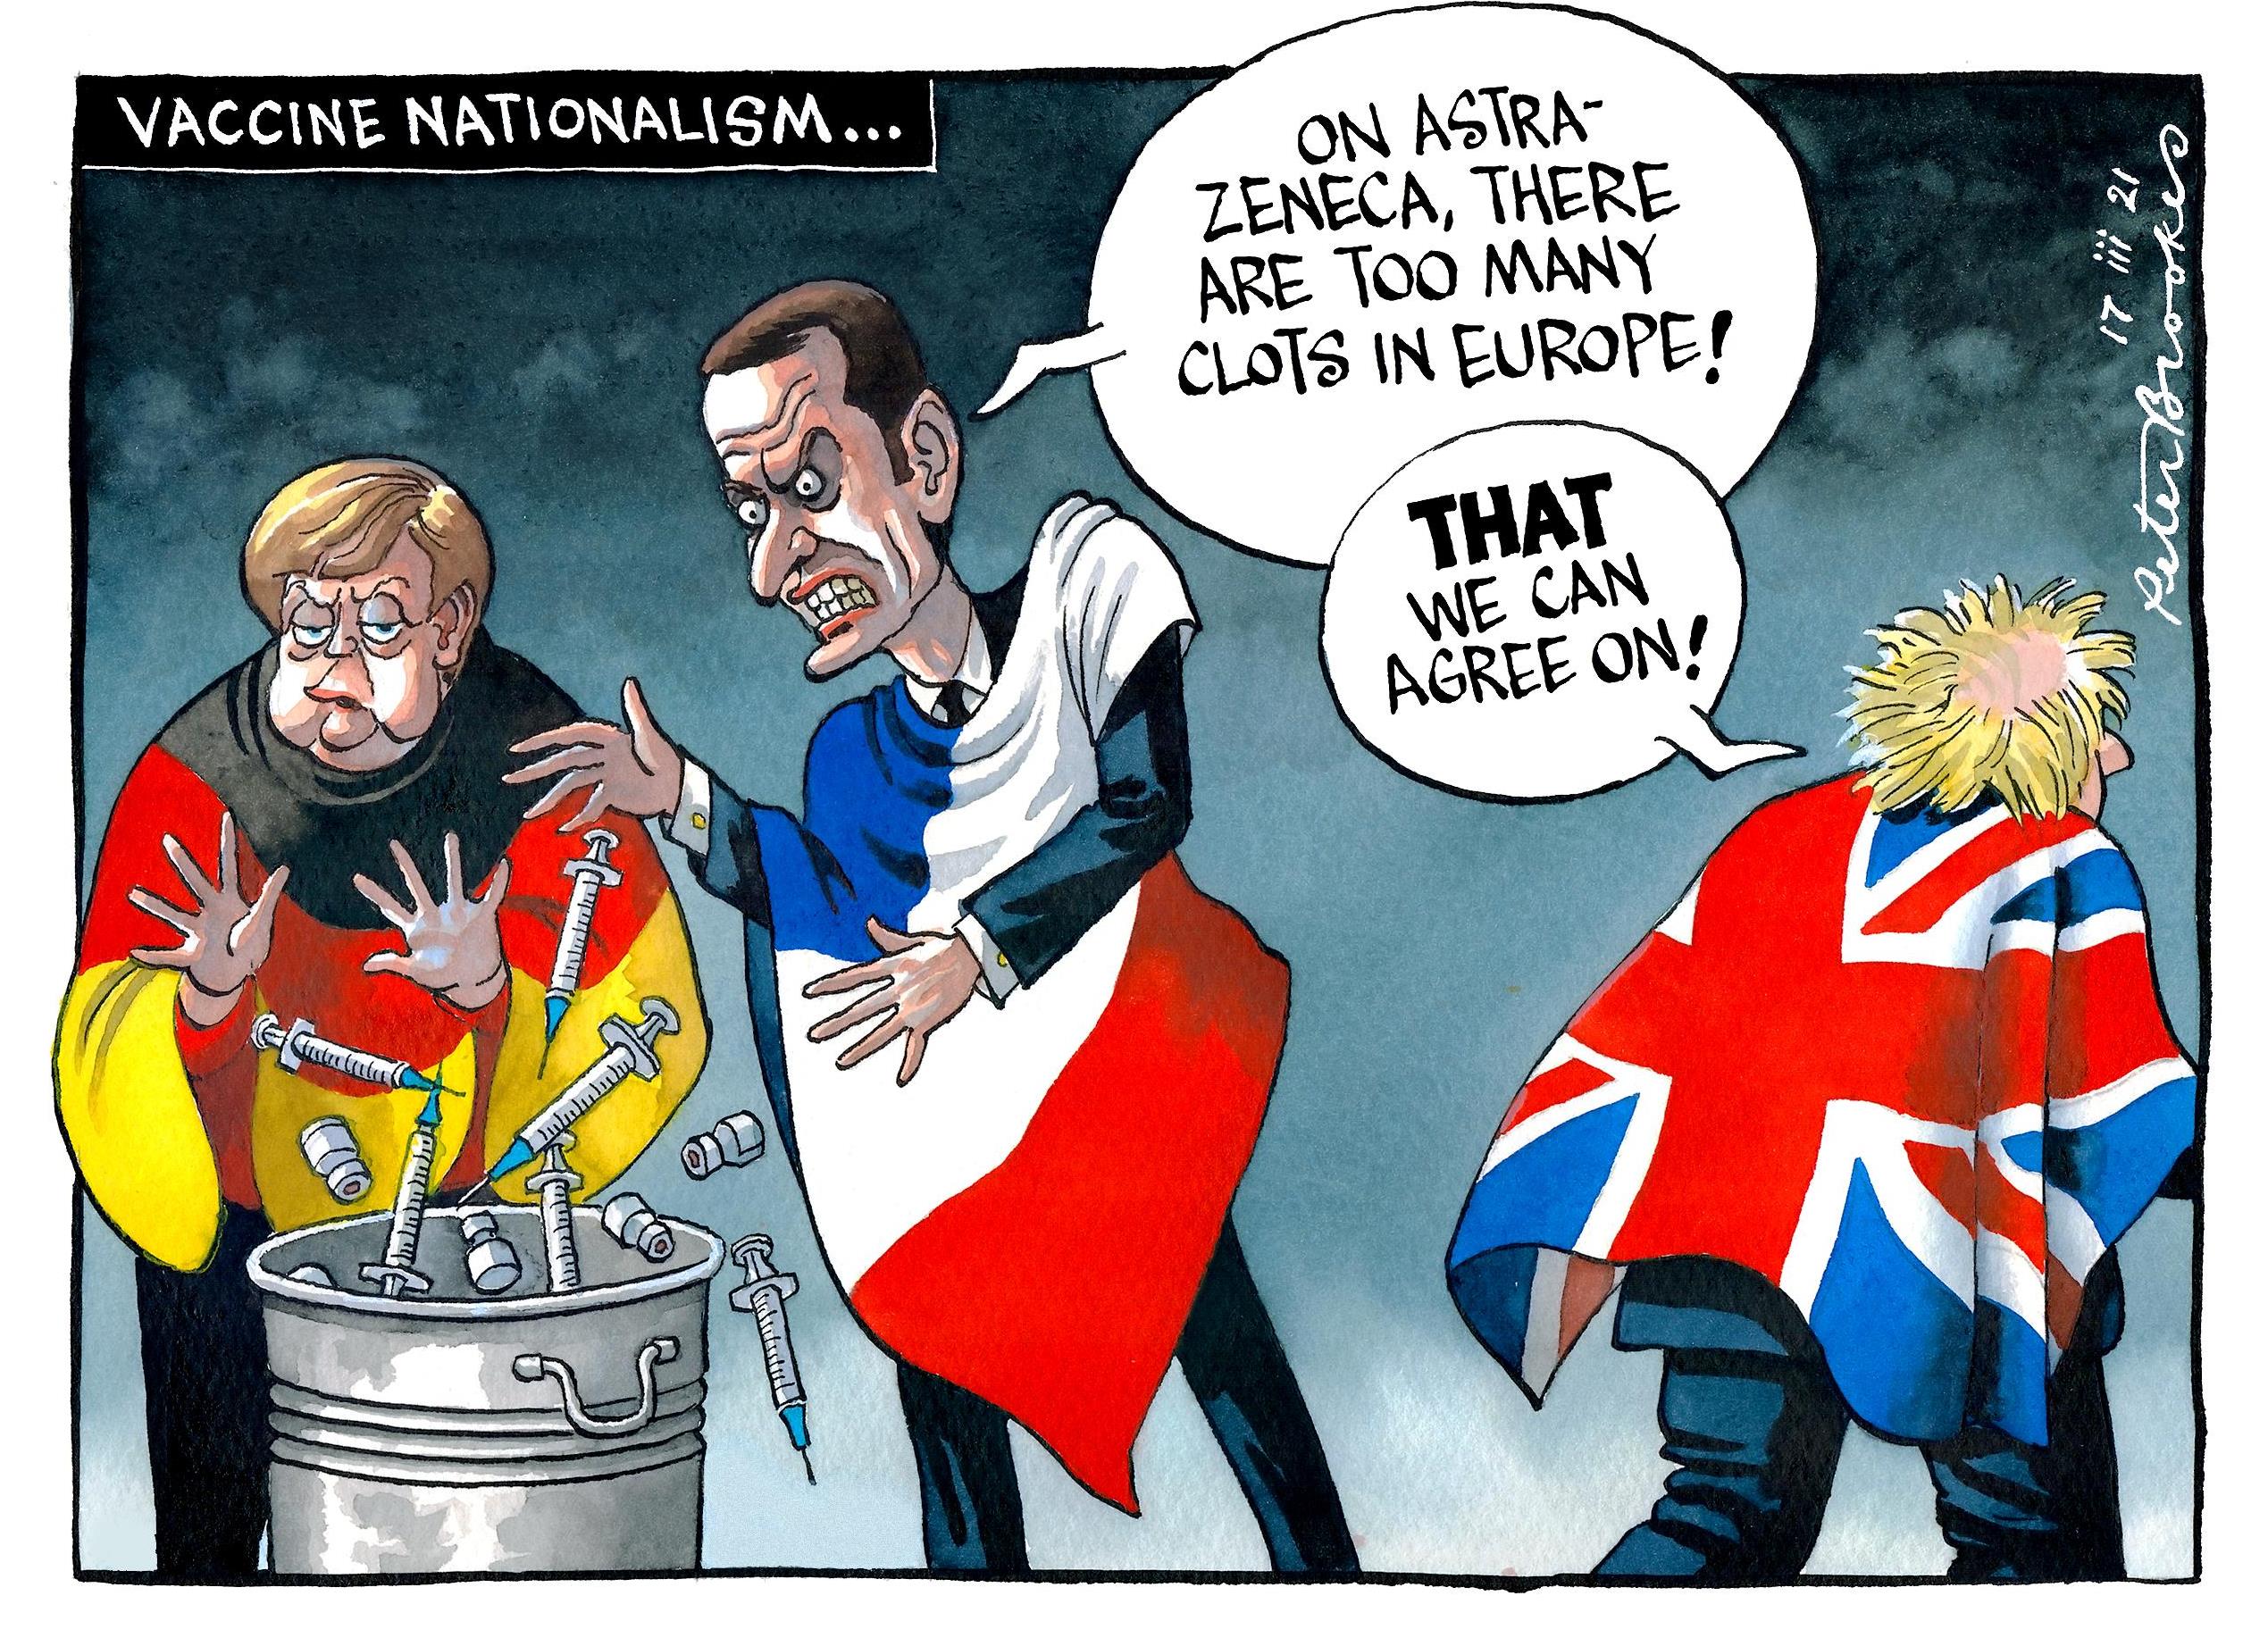 Vaccine nationalism cartoon - enlarge